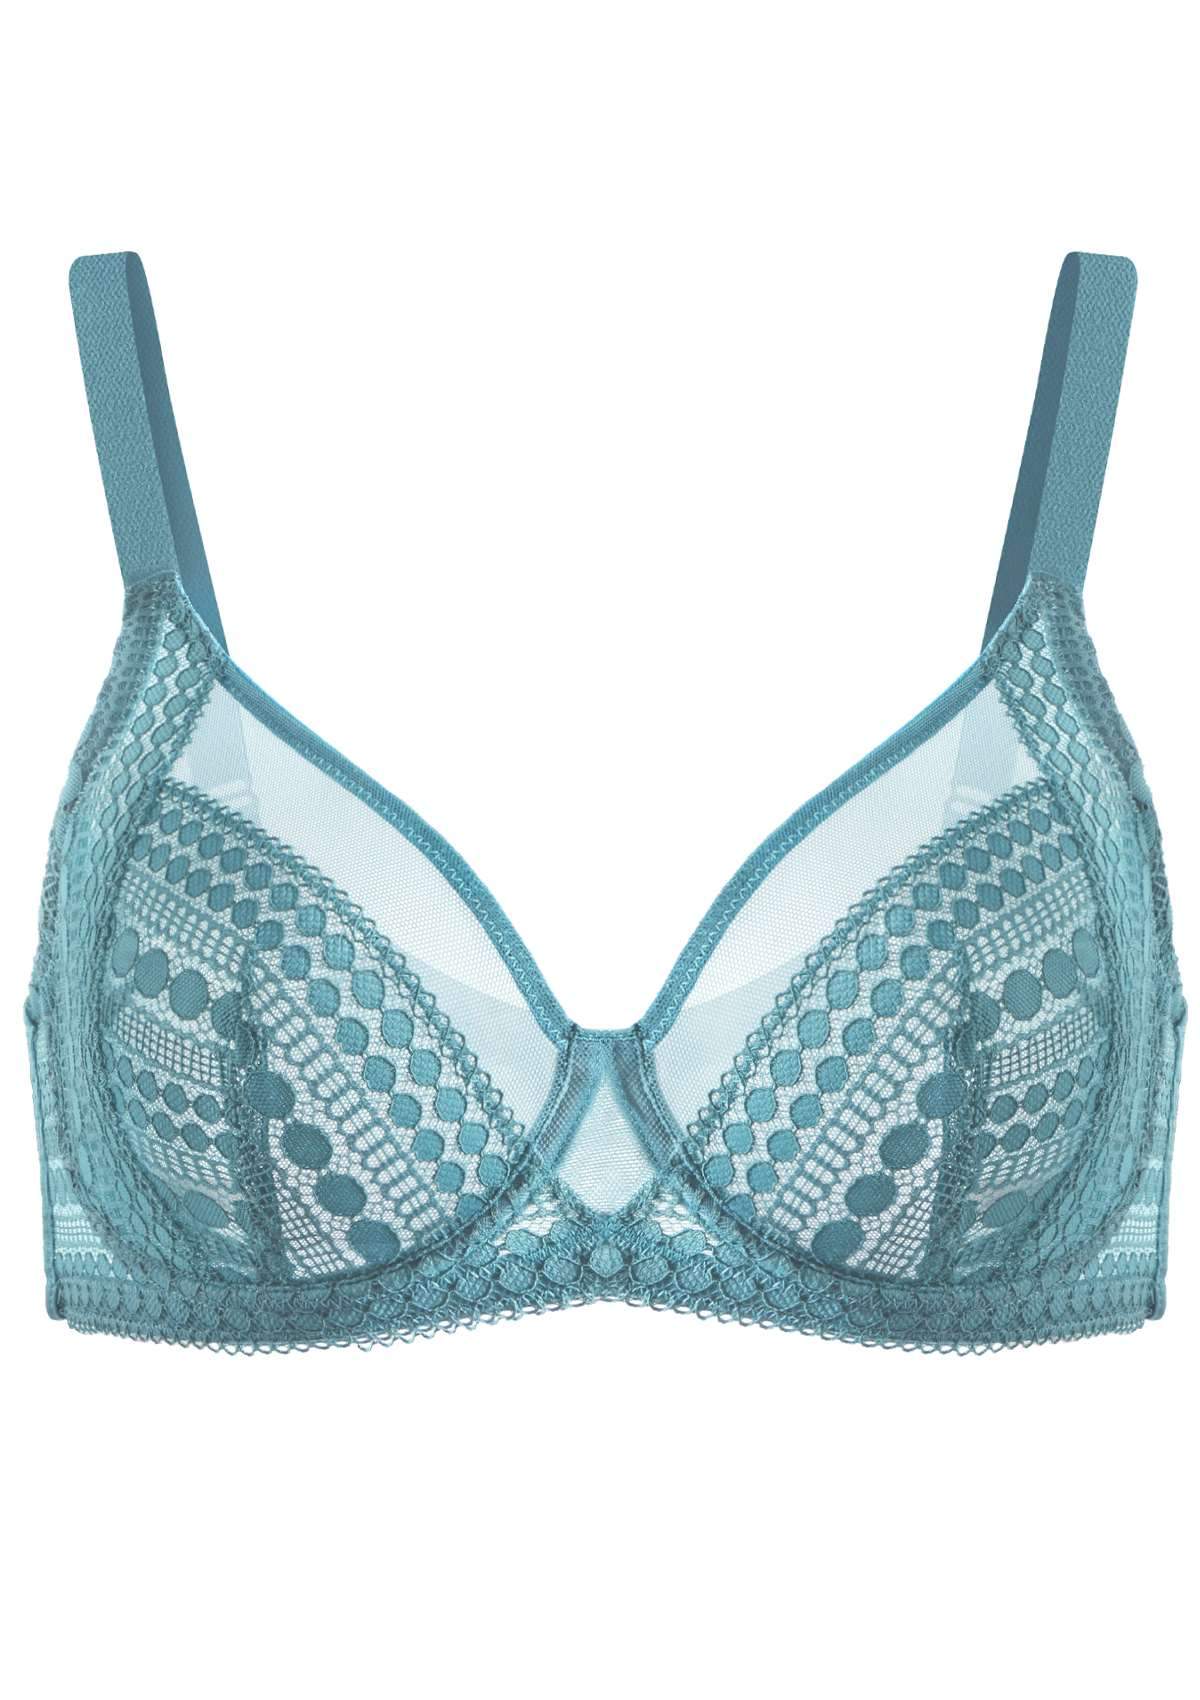 HSIA Heroine Matching Bra And Underwear Set: Bra For Big Boobs - Brittany Blue / 36 / DDD/F